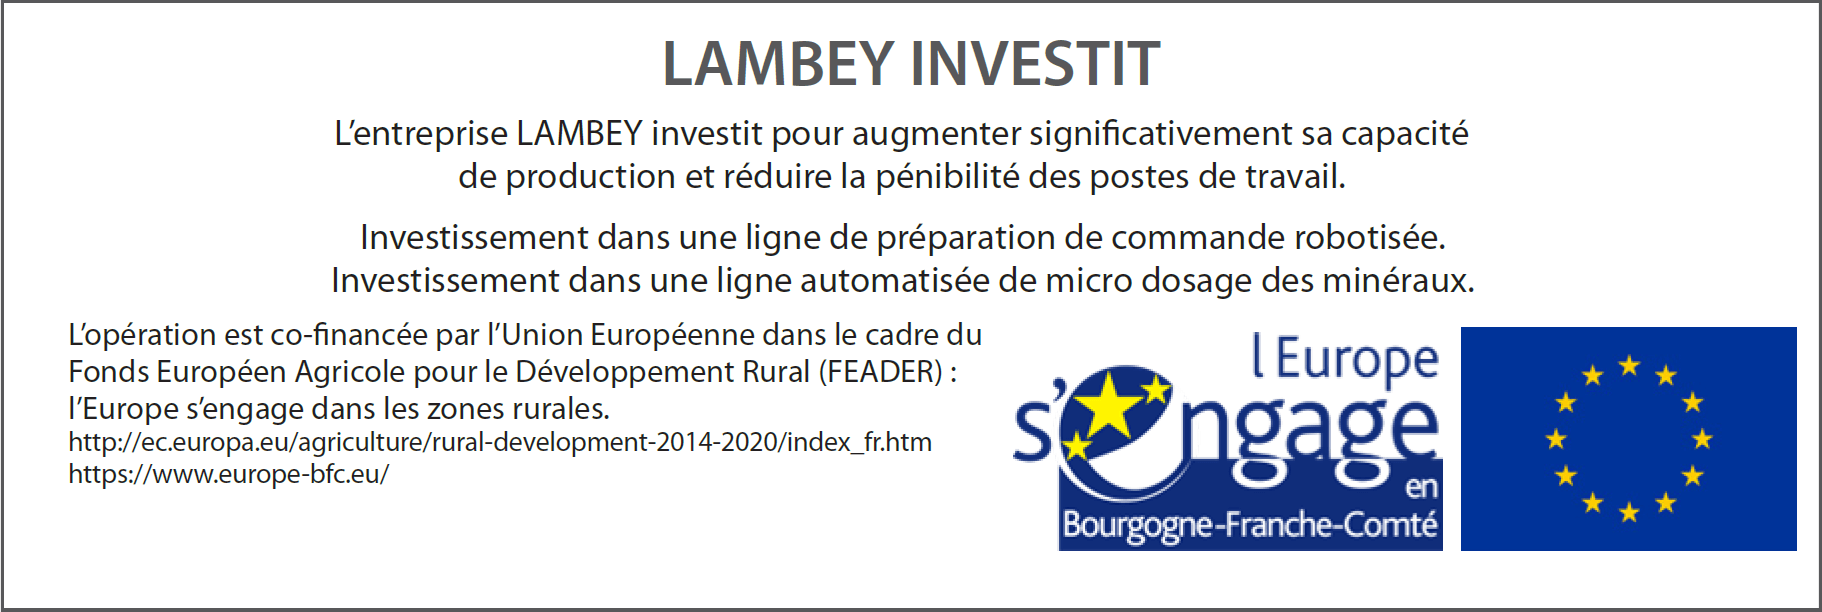 Lambey investit